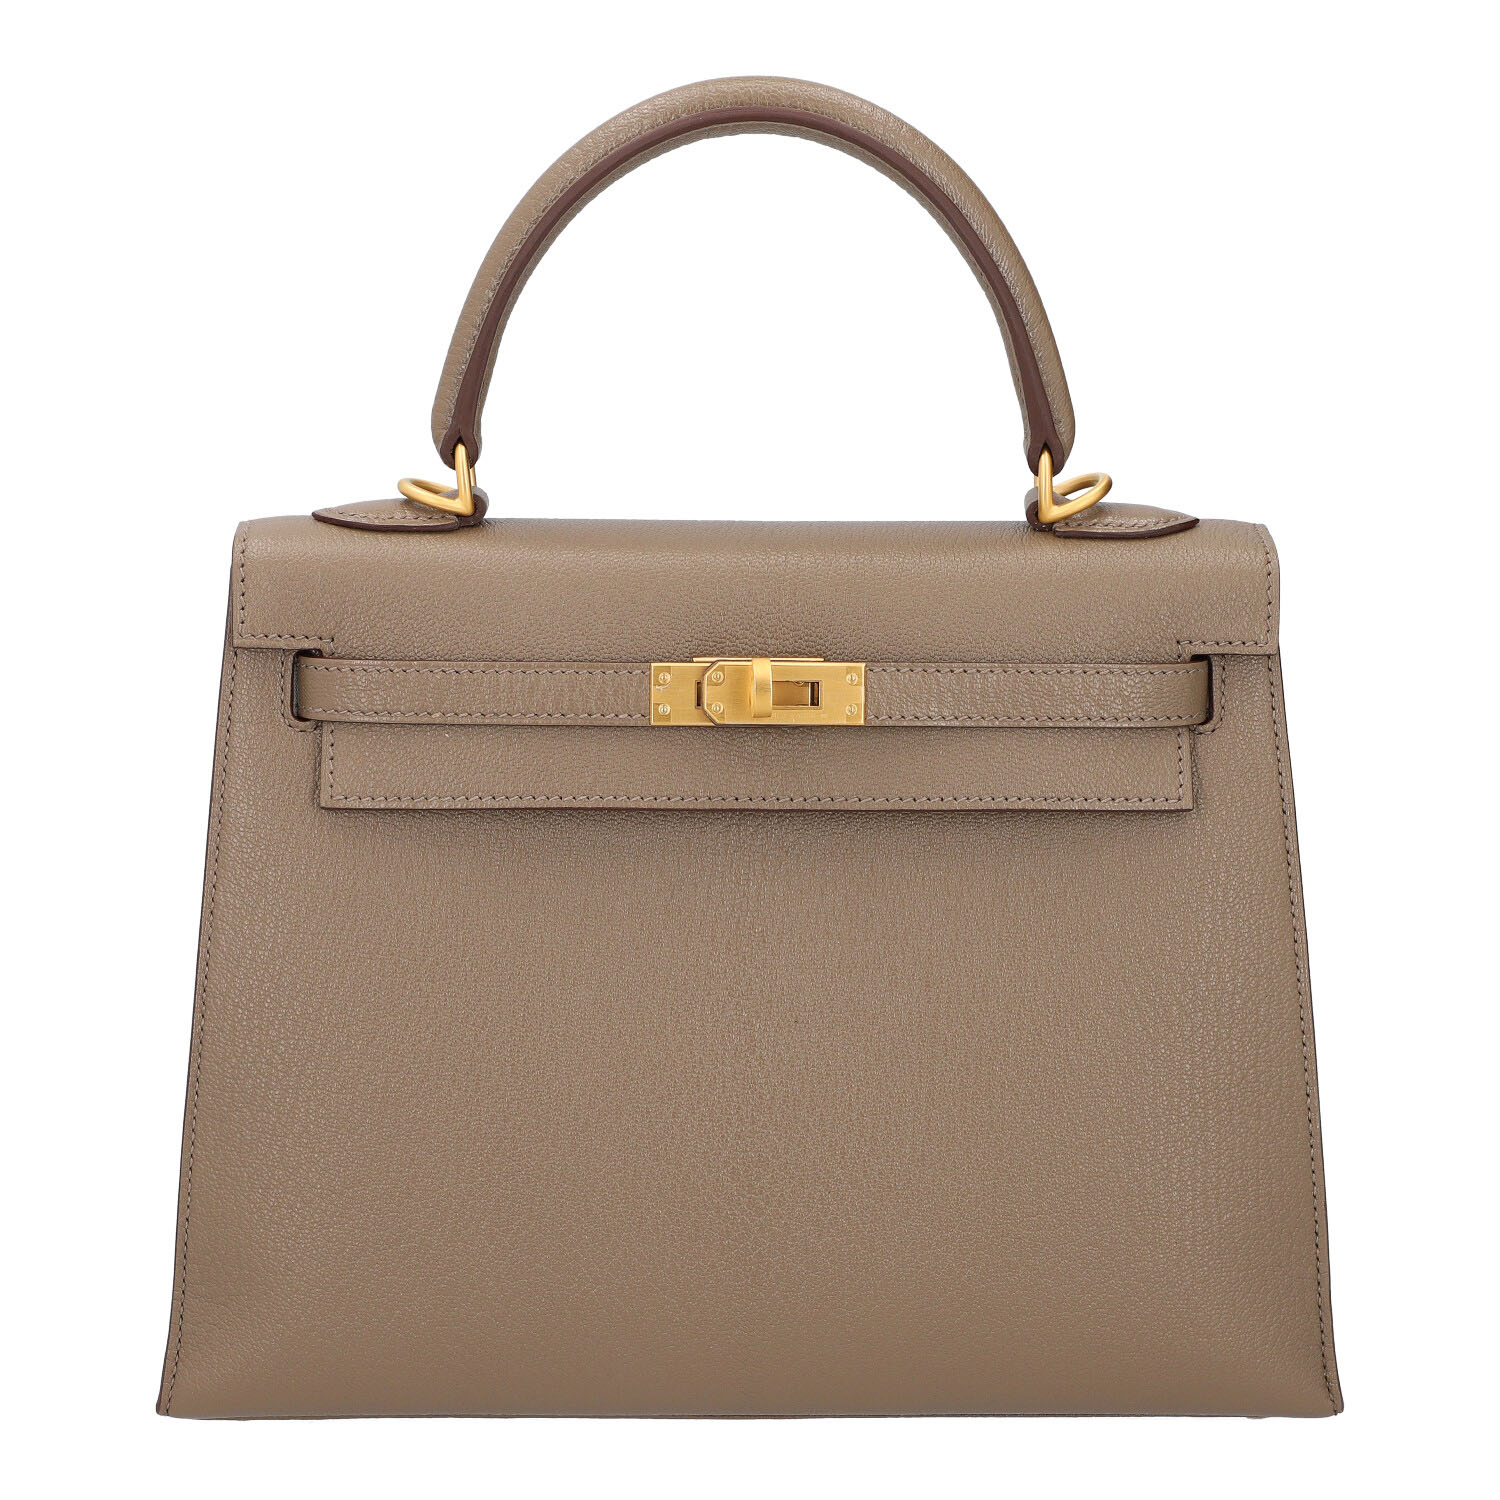 EPPLI | HERMÈS handbag 'SAC KELLY II SELLIER 25'. | purchase online